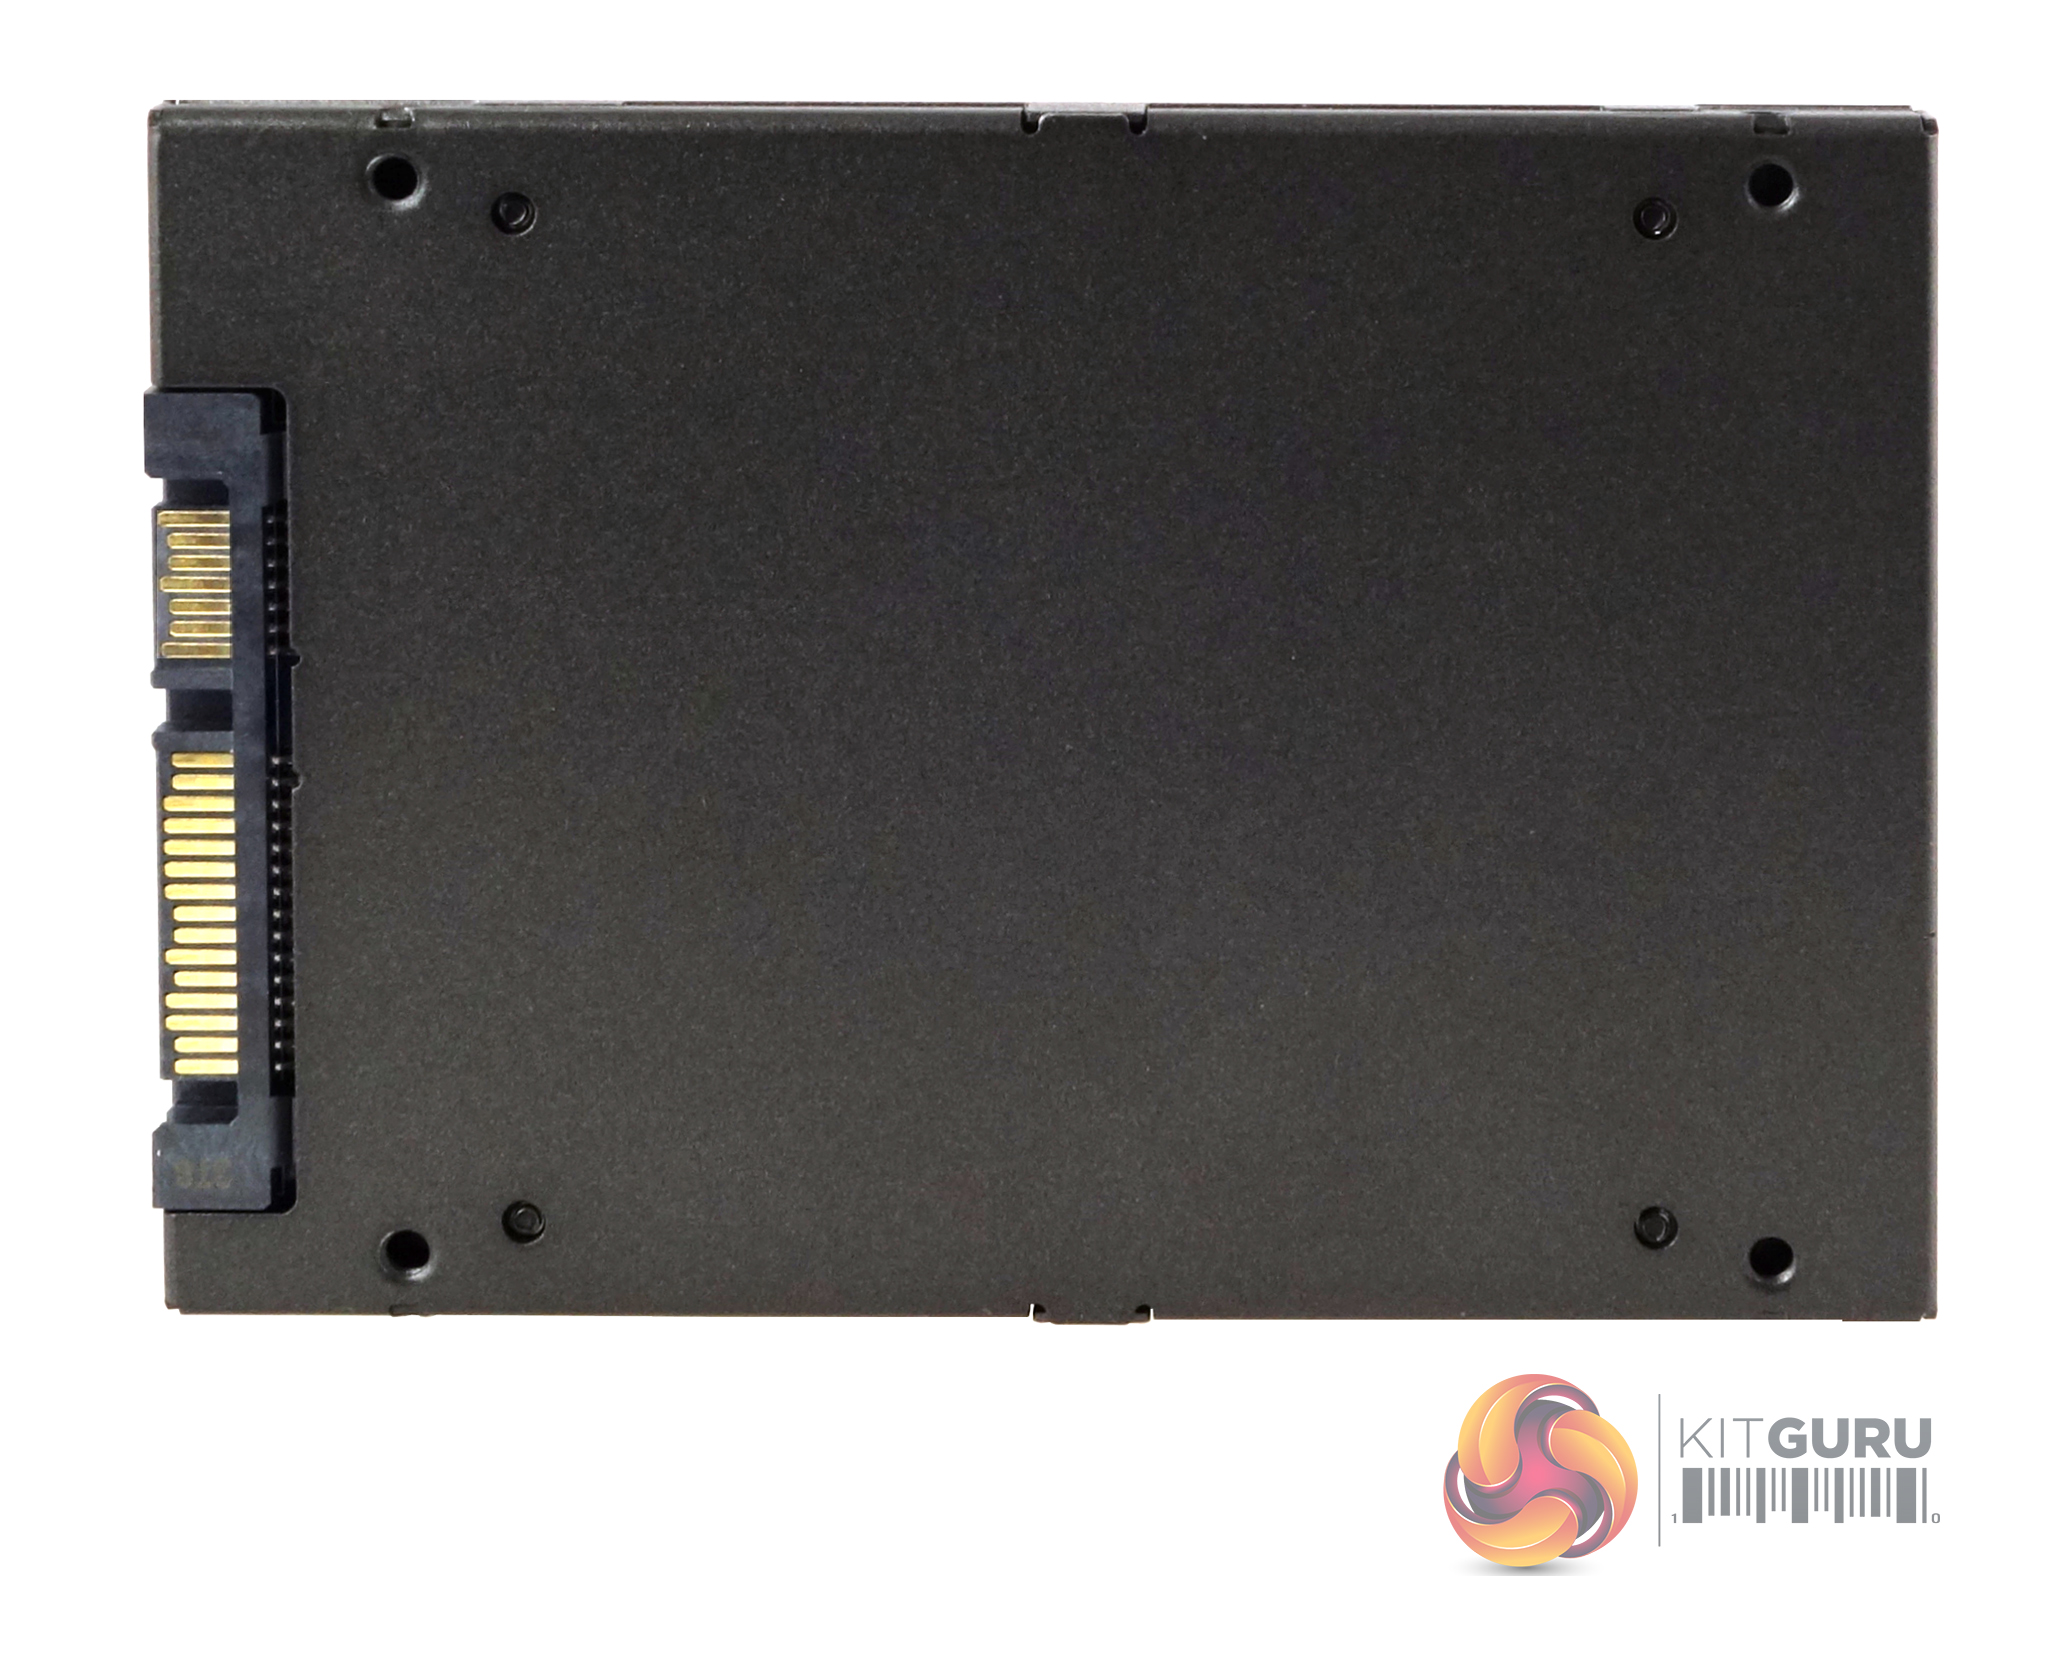 Kingston DC450R 3.84TB SSD Review | KitGuru